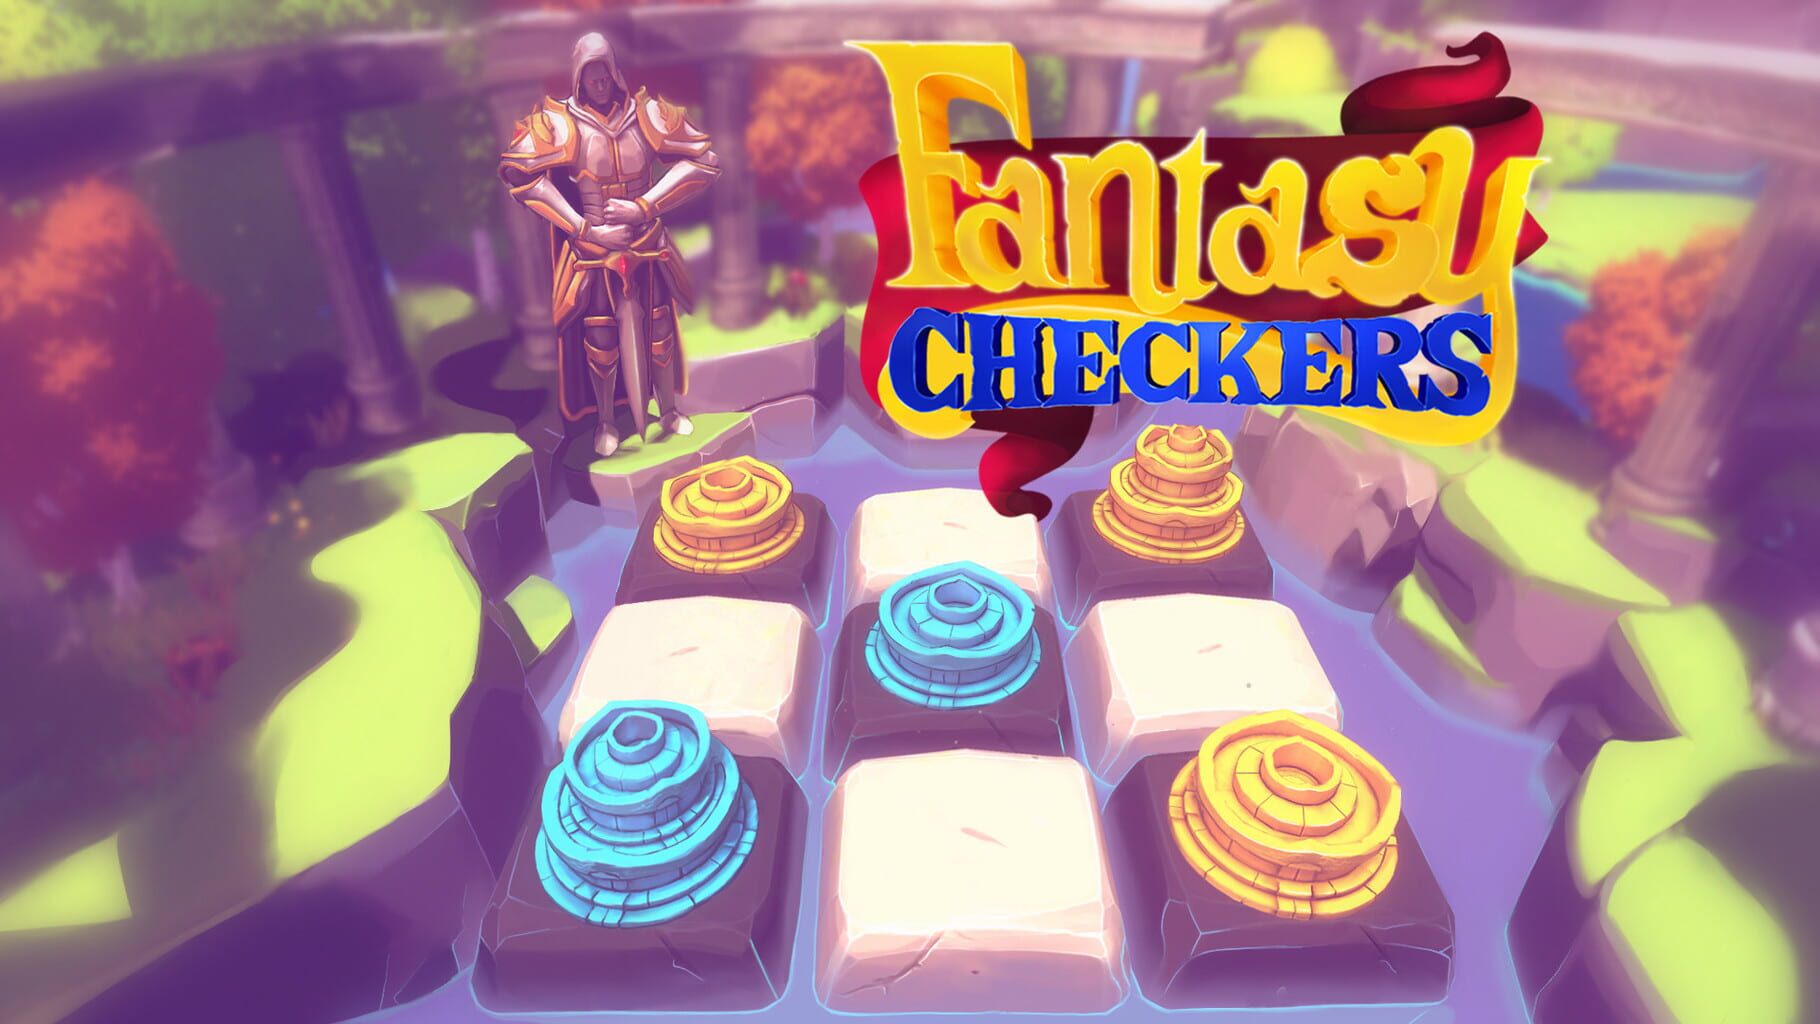 Fantasy Checkers artwork